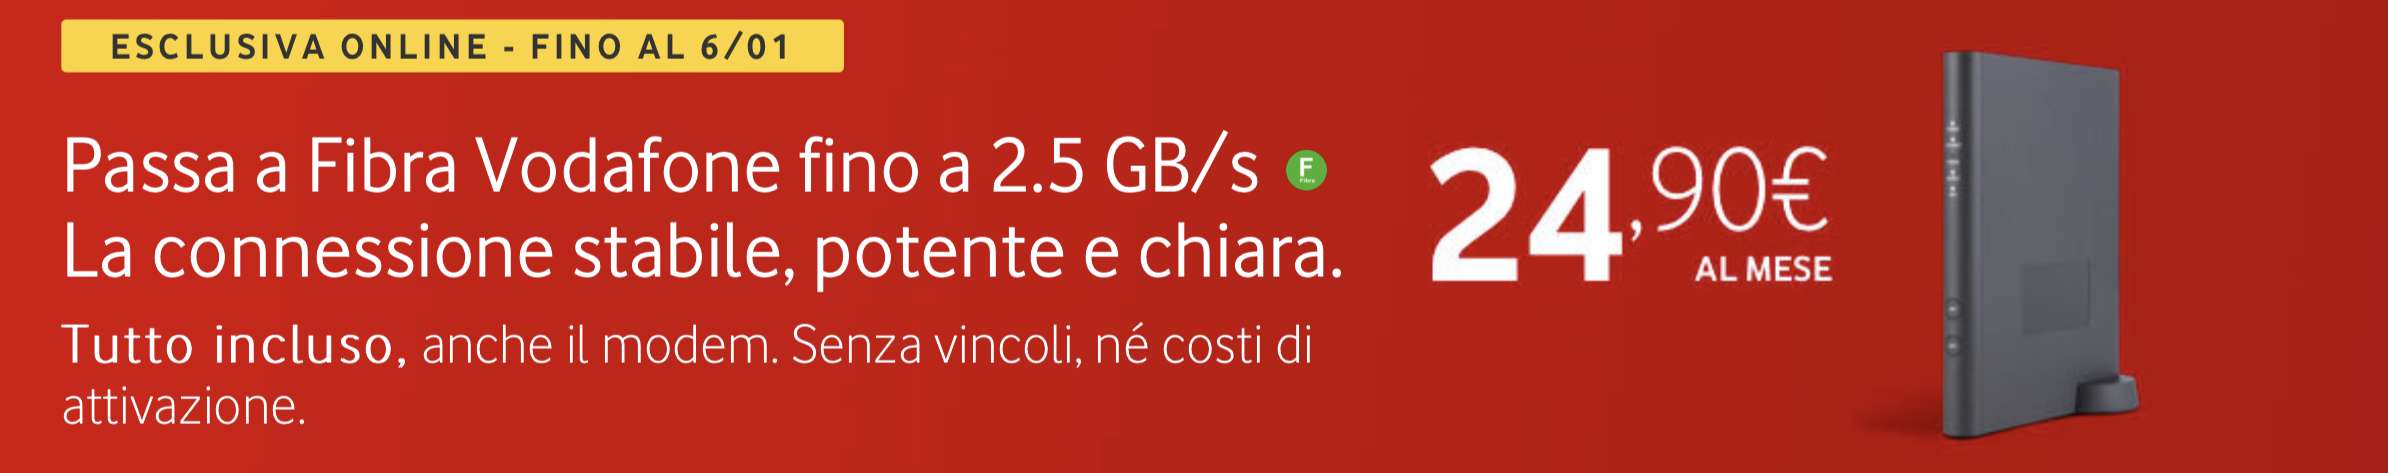 Vodafone Internet Unlimited